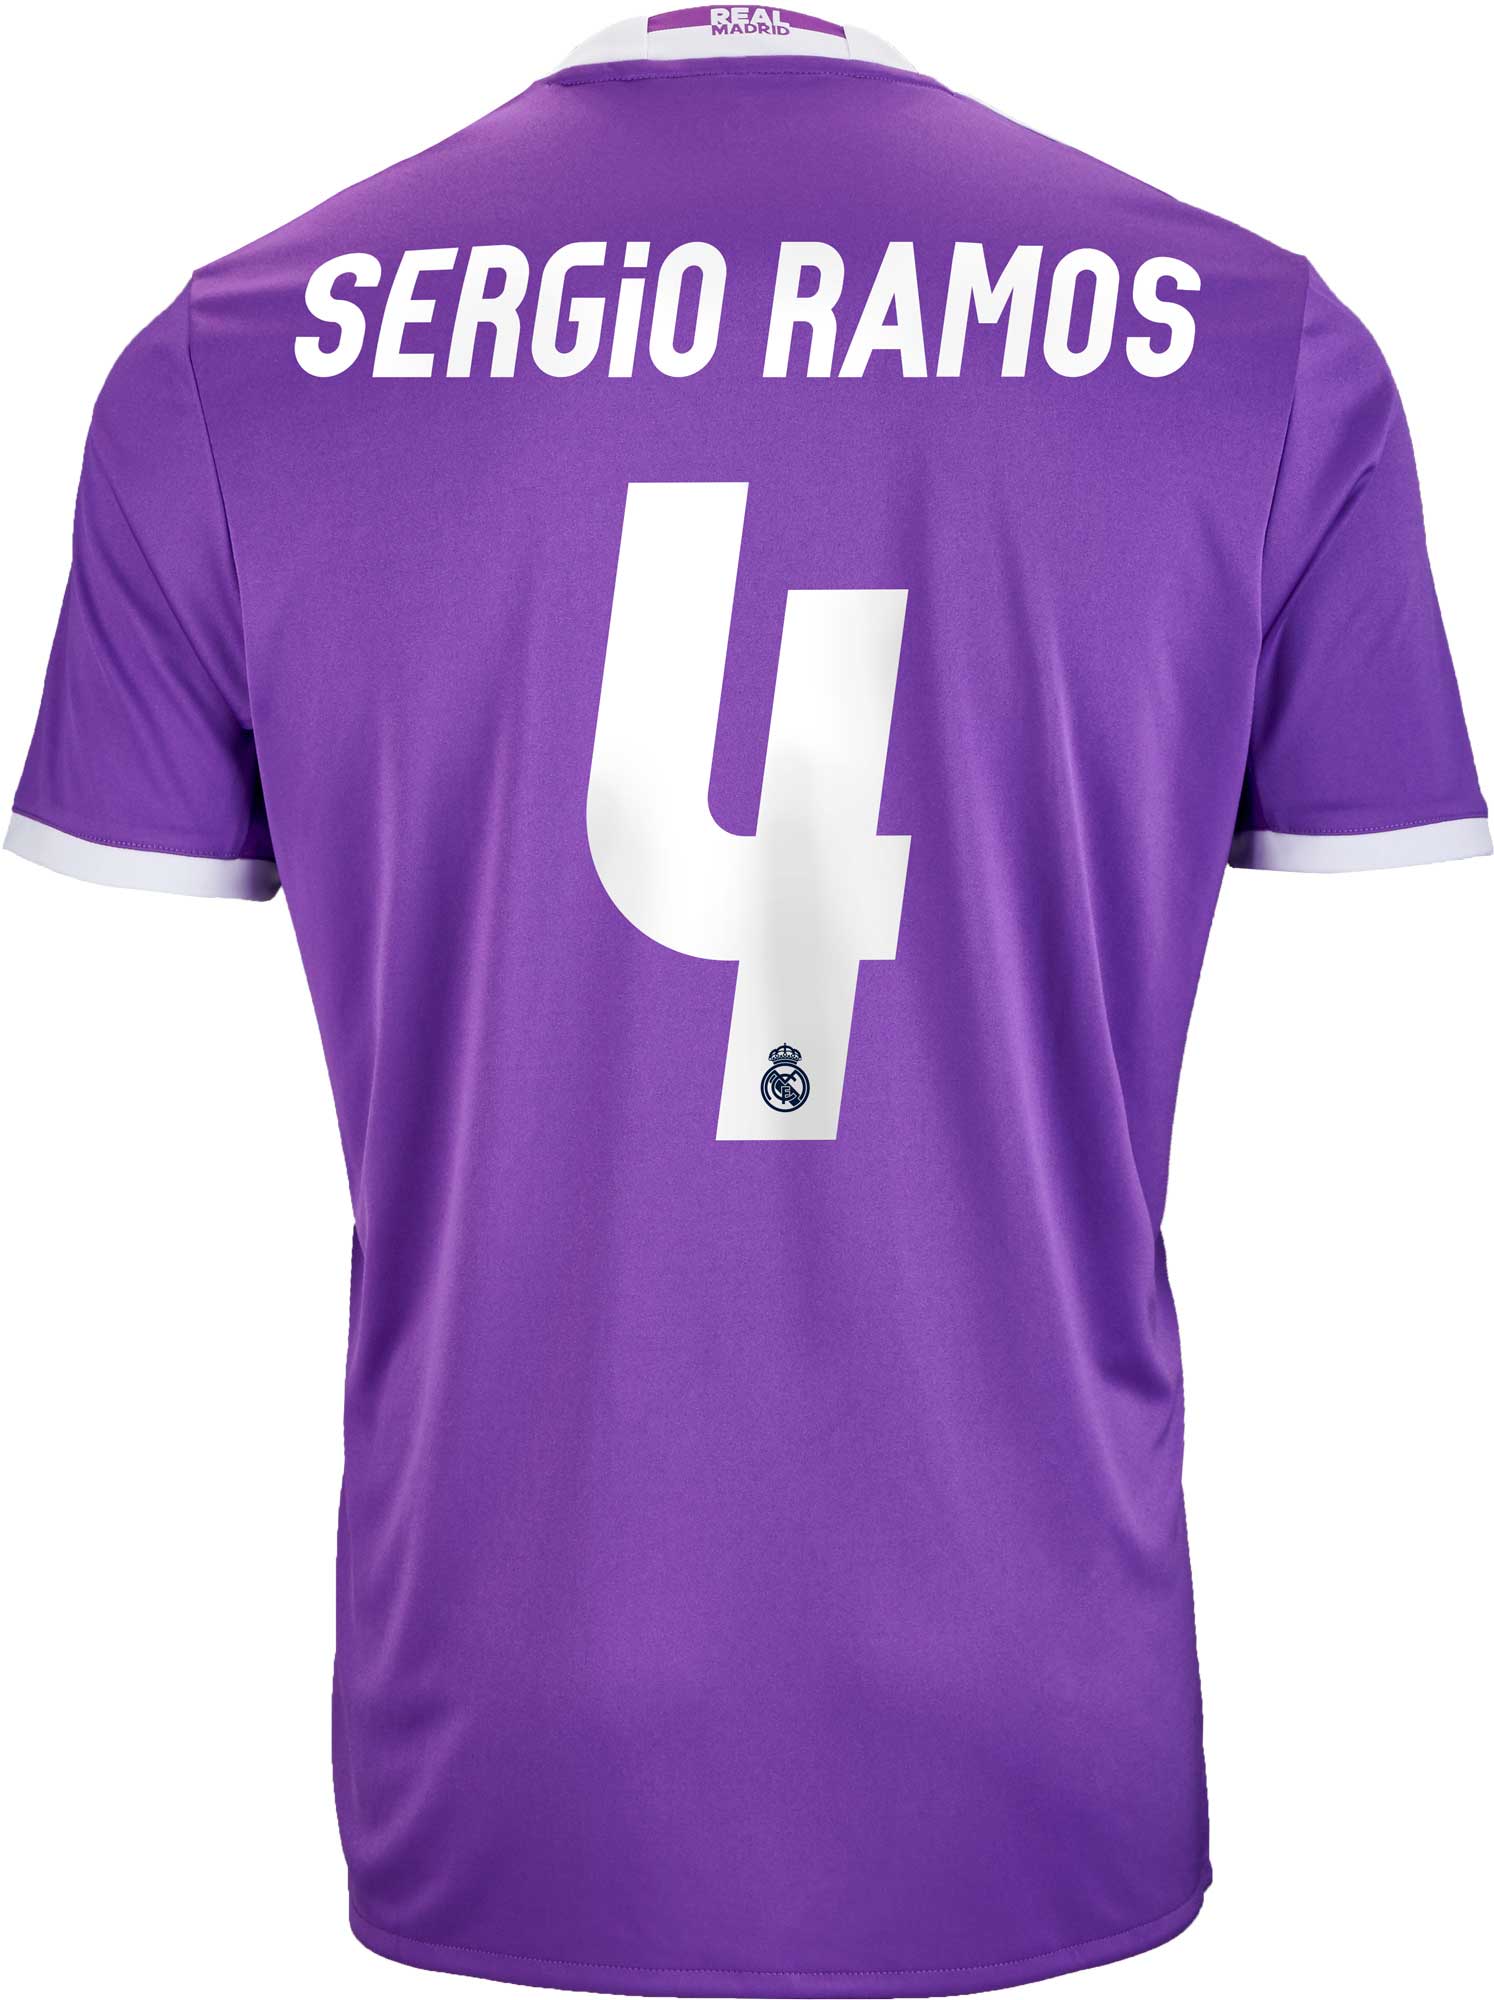 Logisch Gematigd Scully adidas Ramos Real Madrid Jersey - 2016 Real Madrid Jerseys